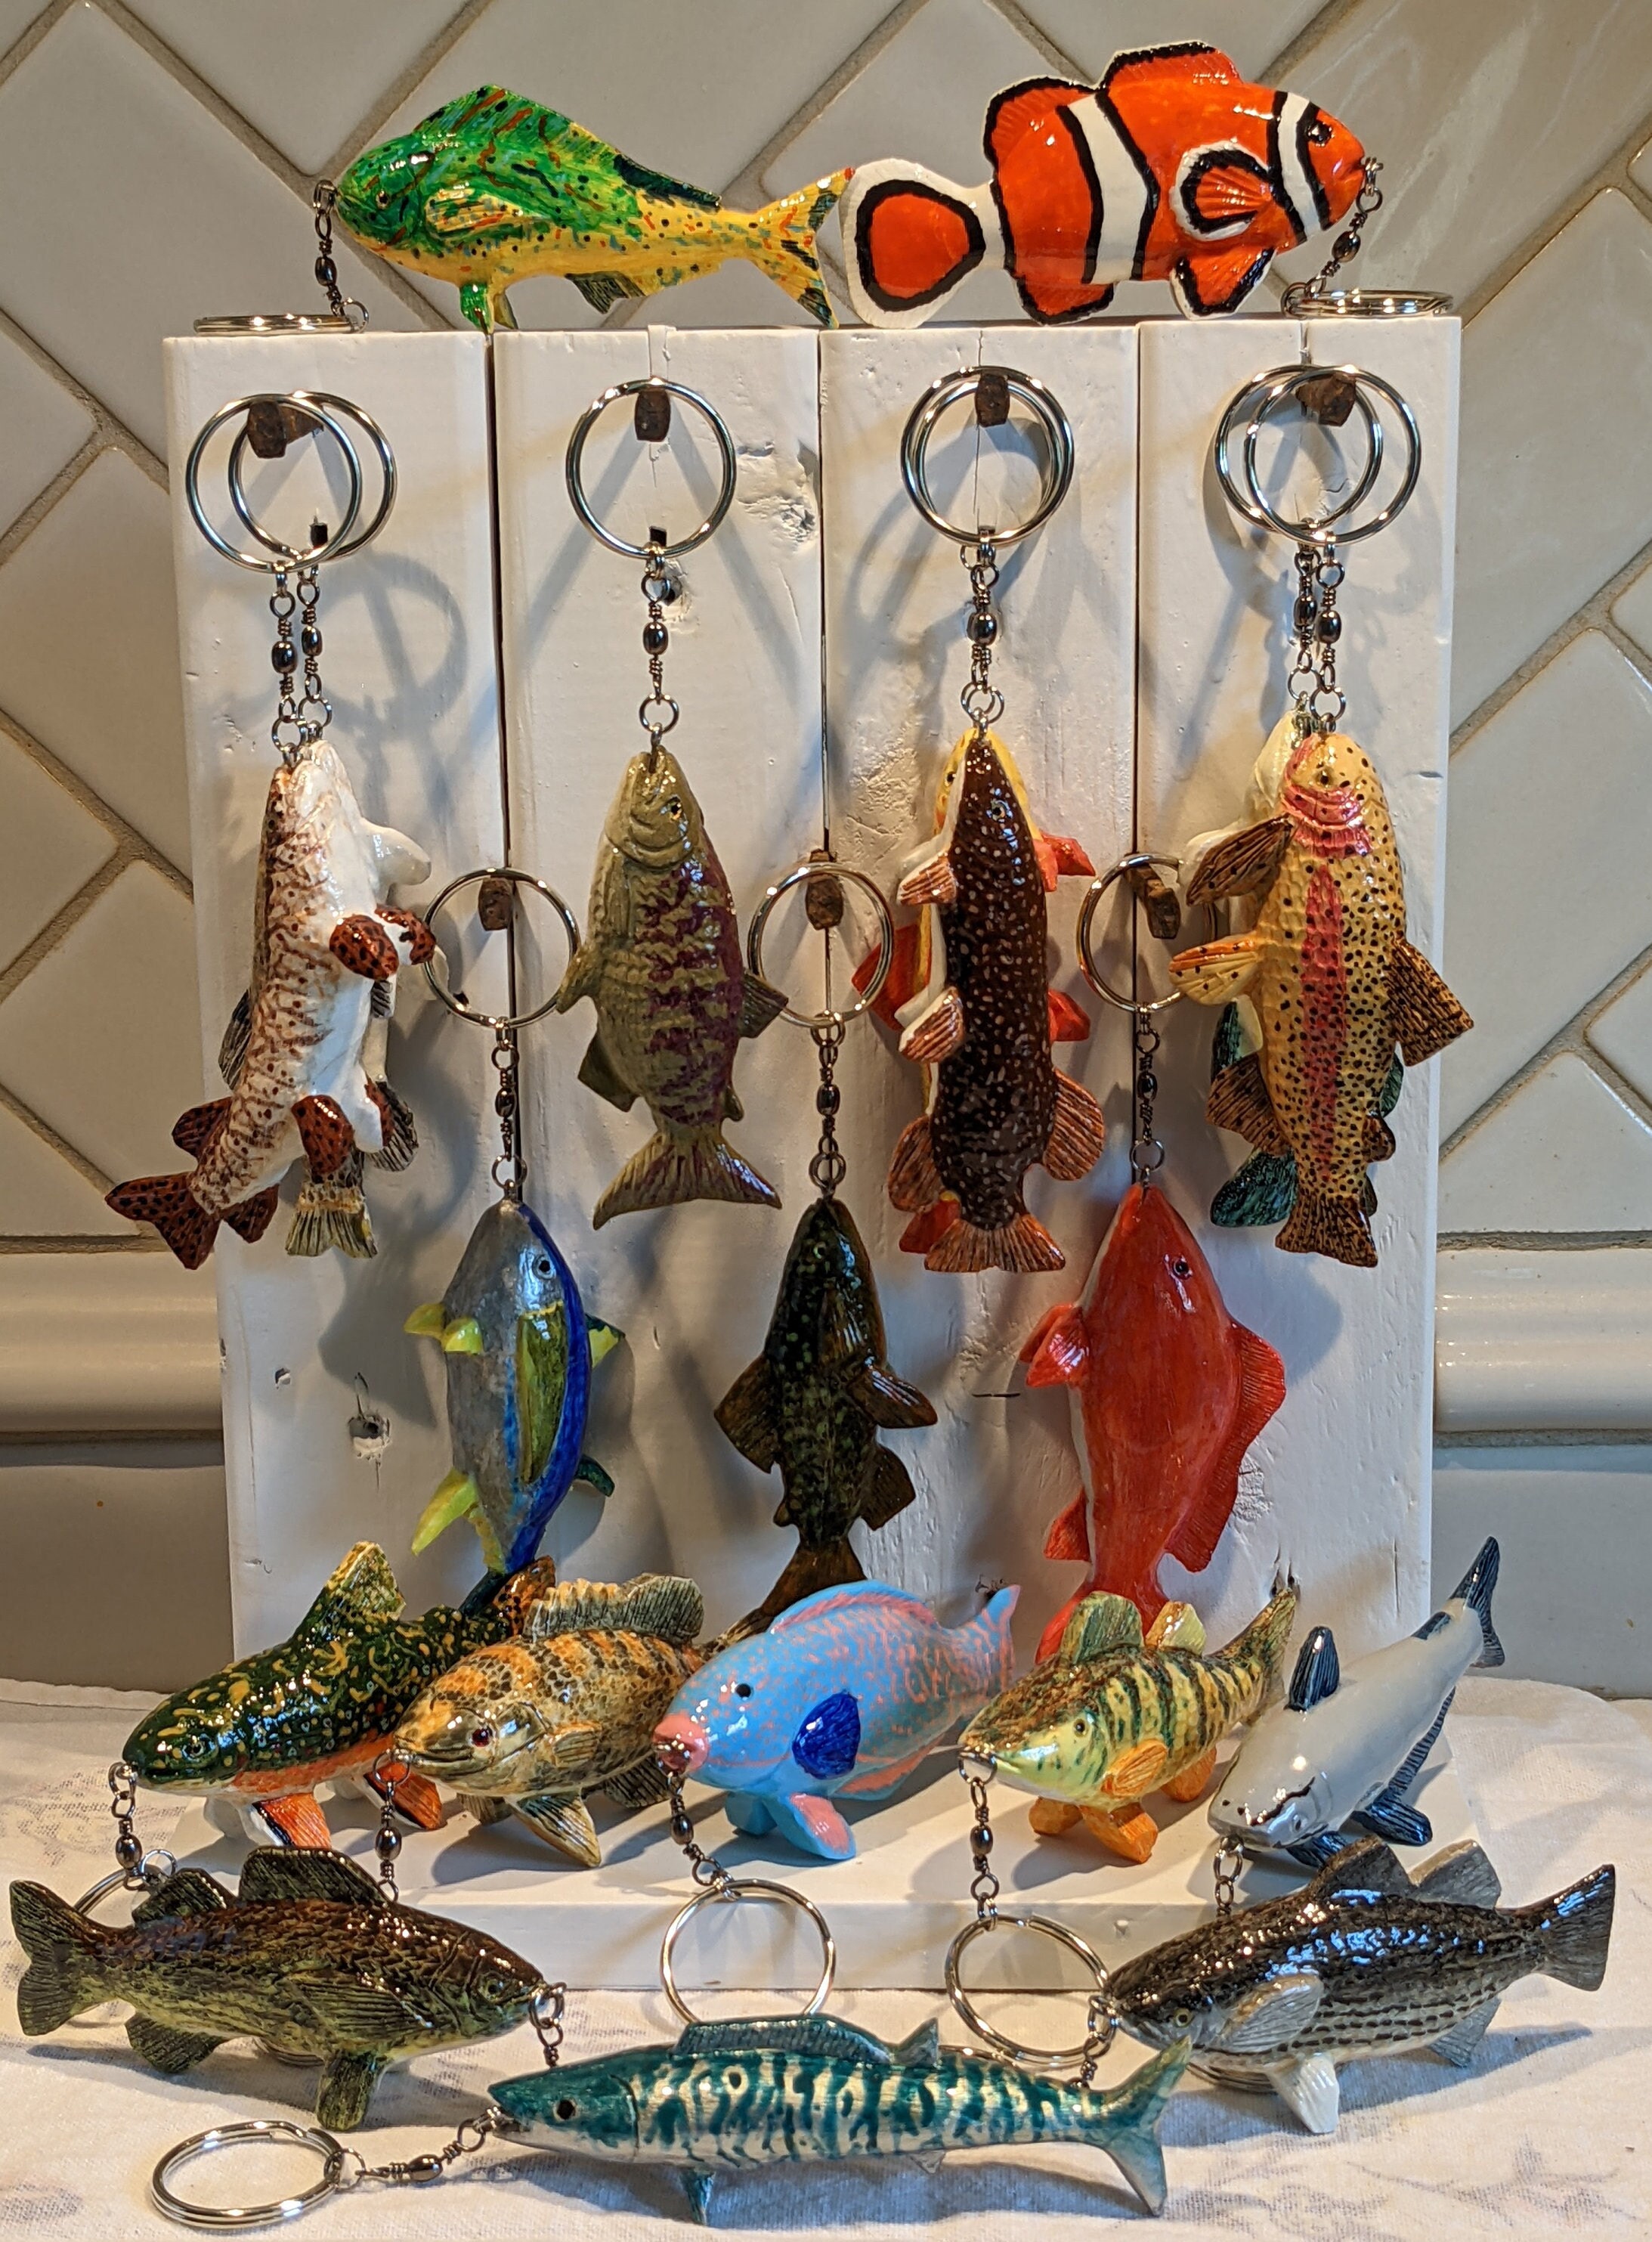 NothinButFish Hand-Carved Fish Keychain